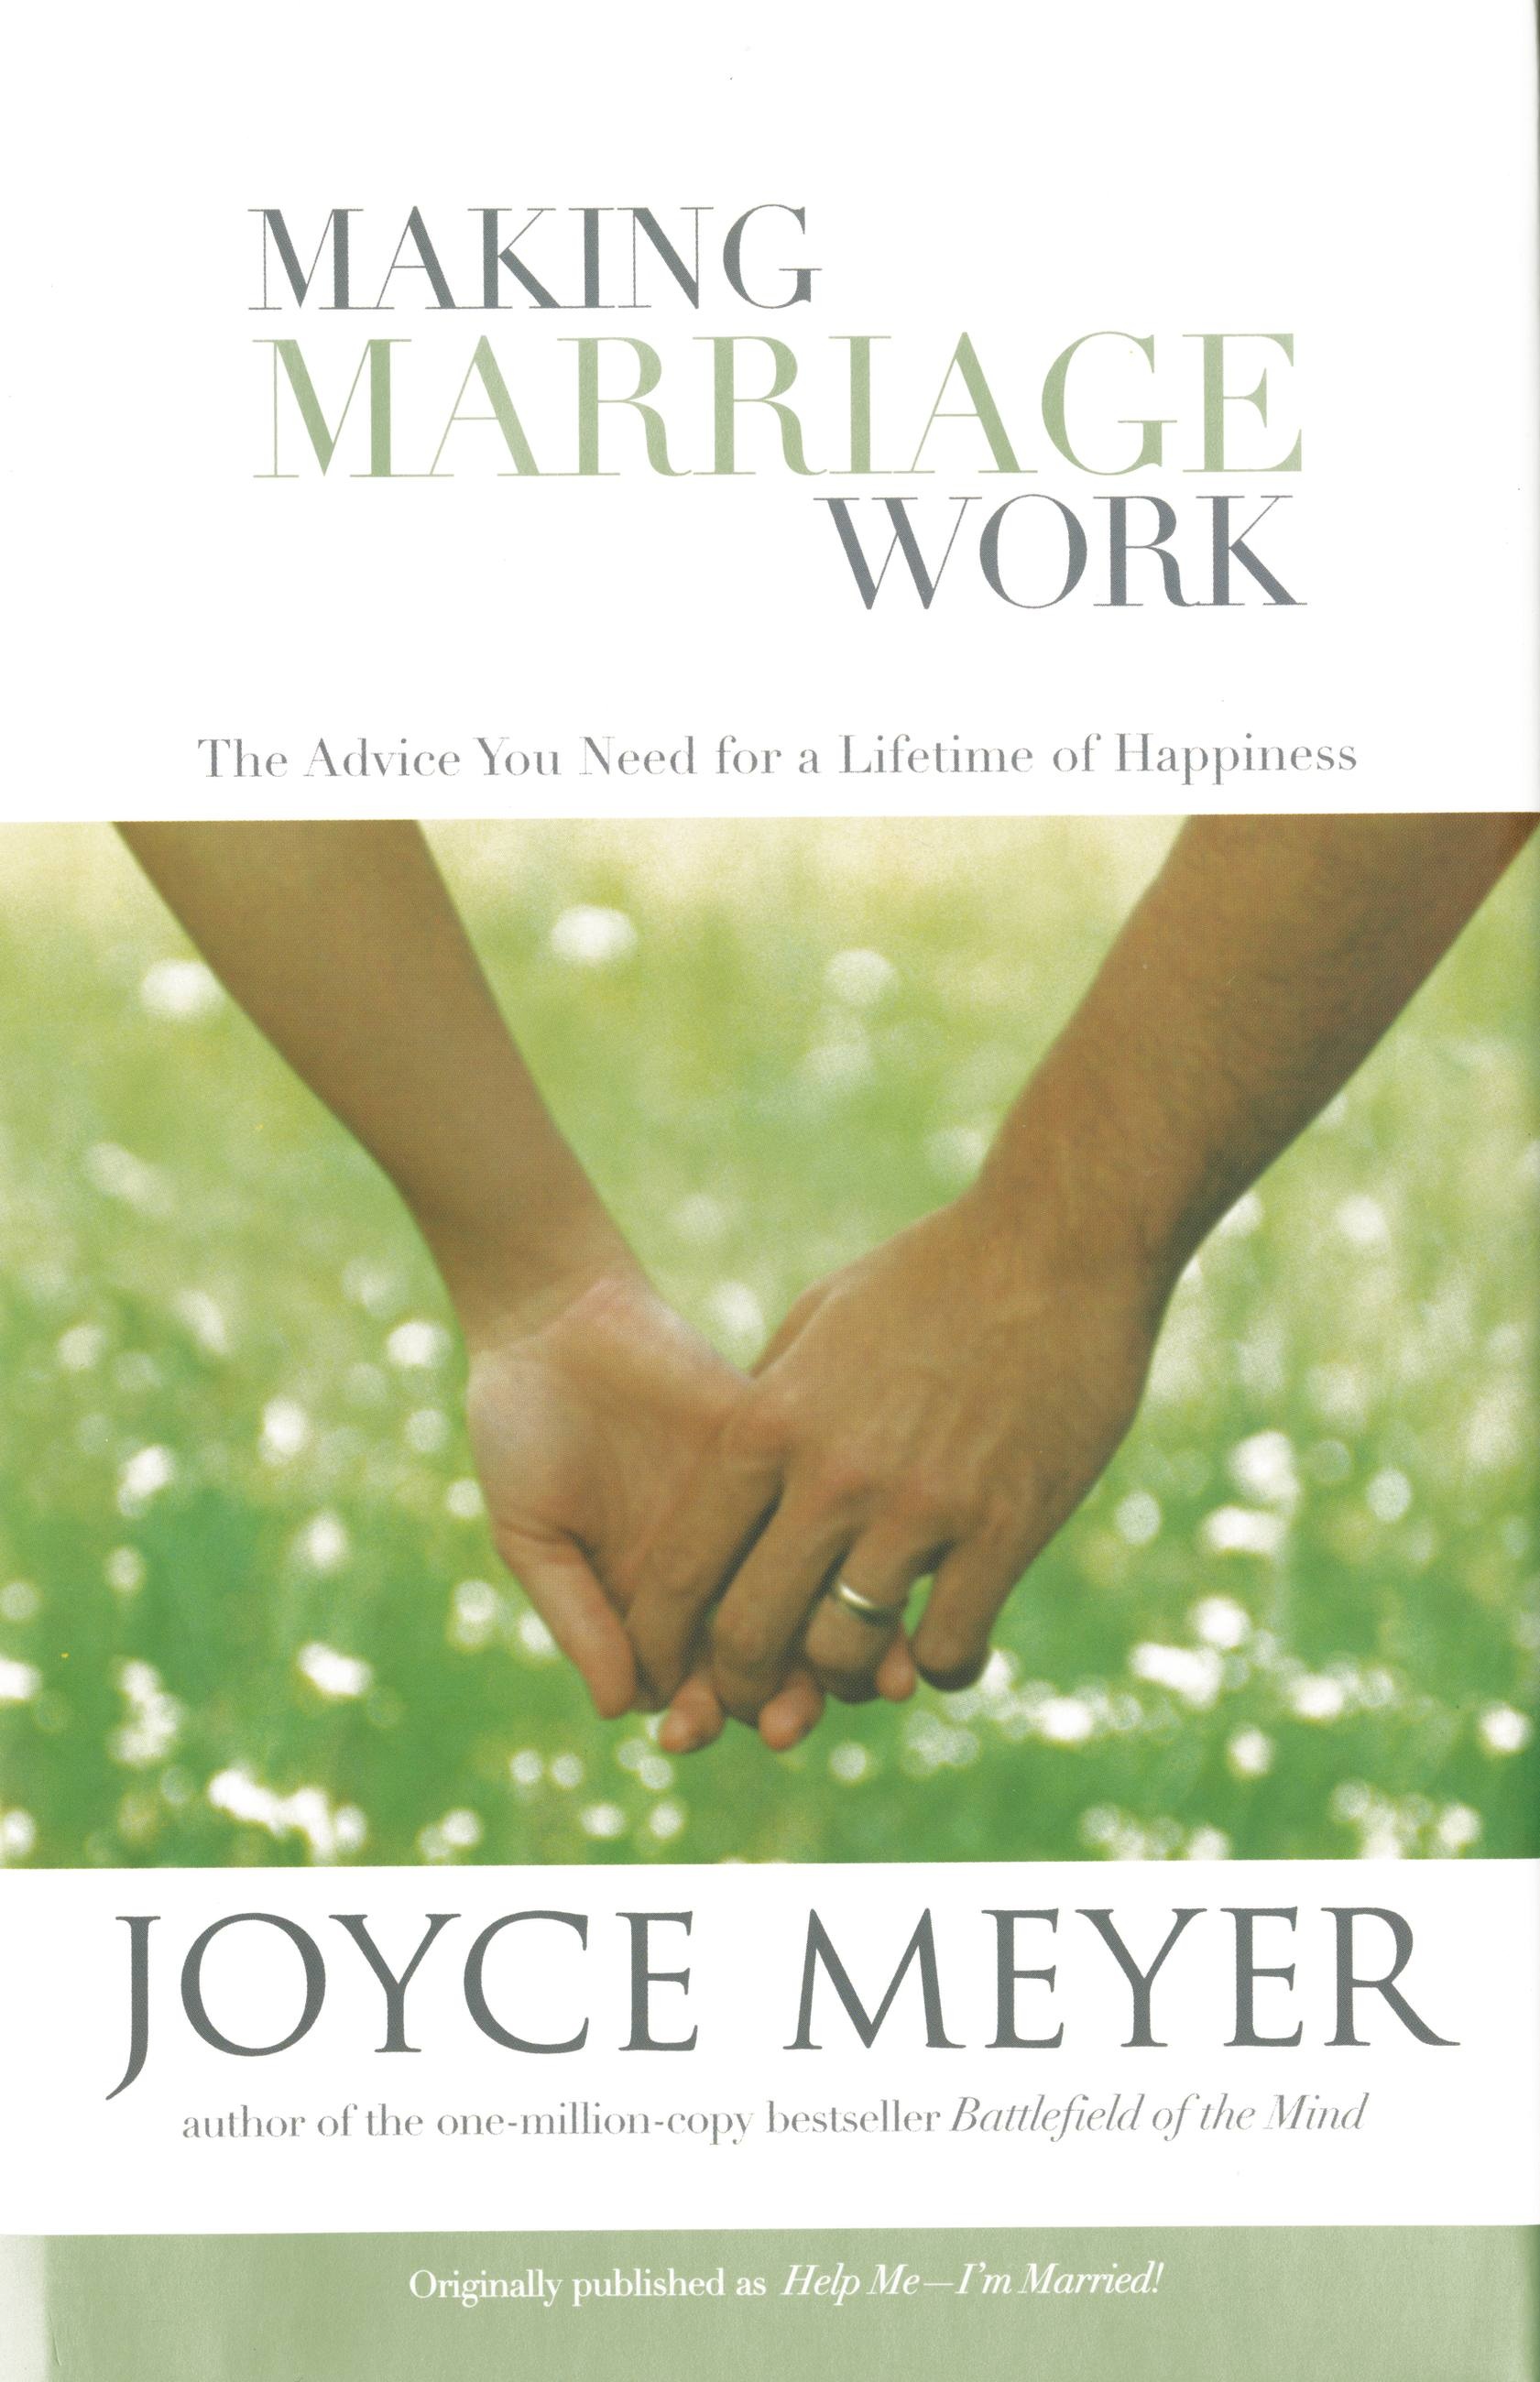 DOWNLOAD PDF: Making Marriage Work by Joyce Meyer 22